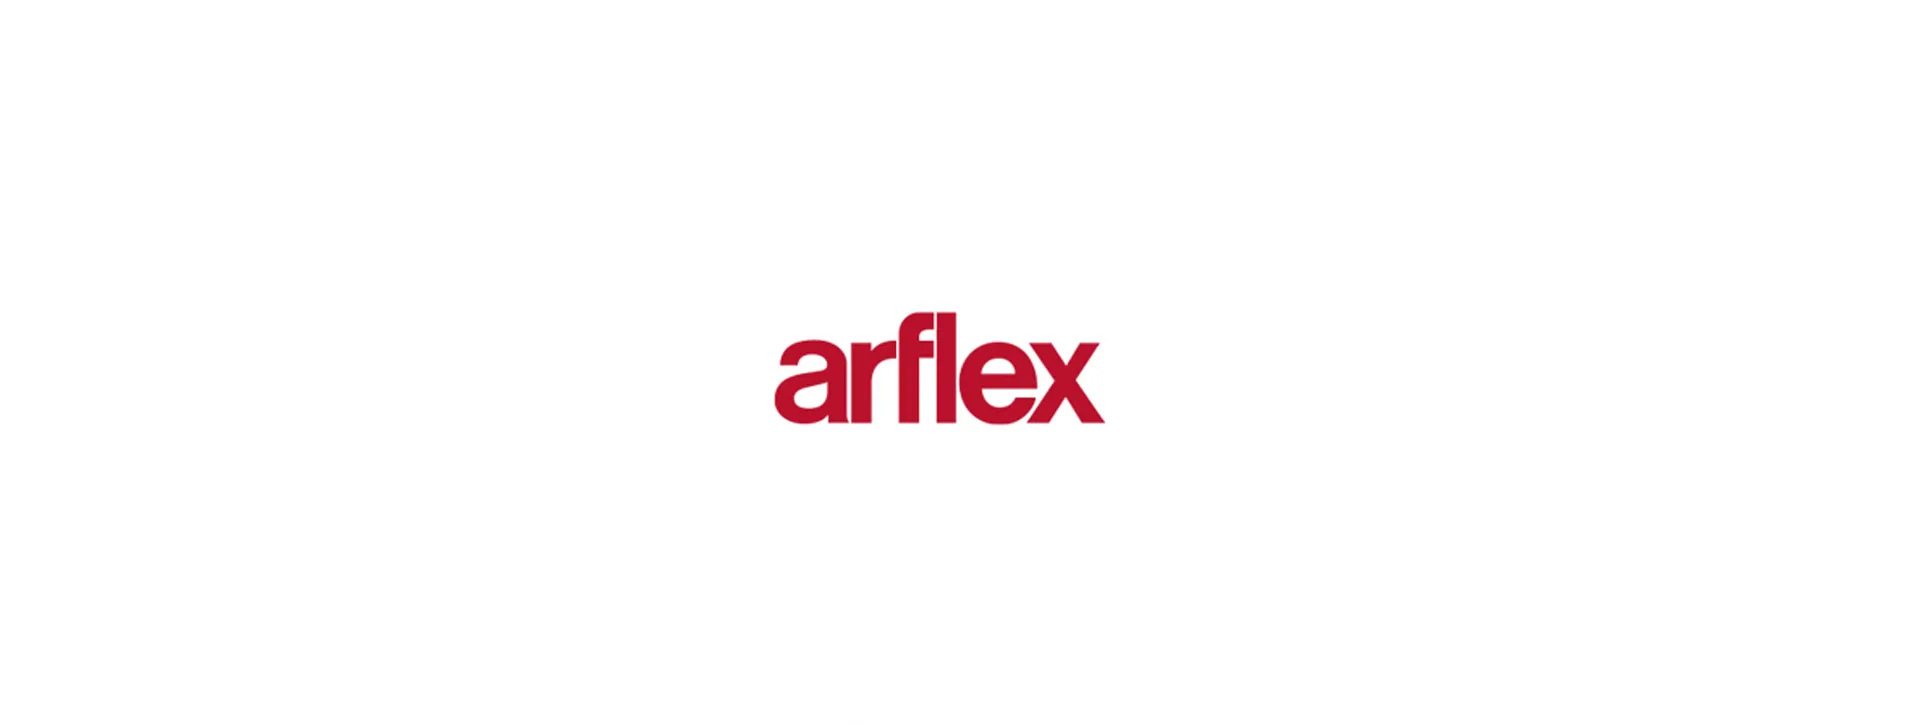 arflex